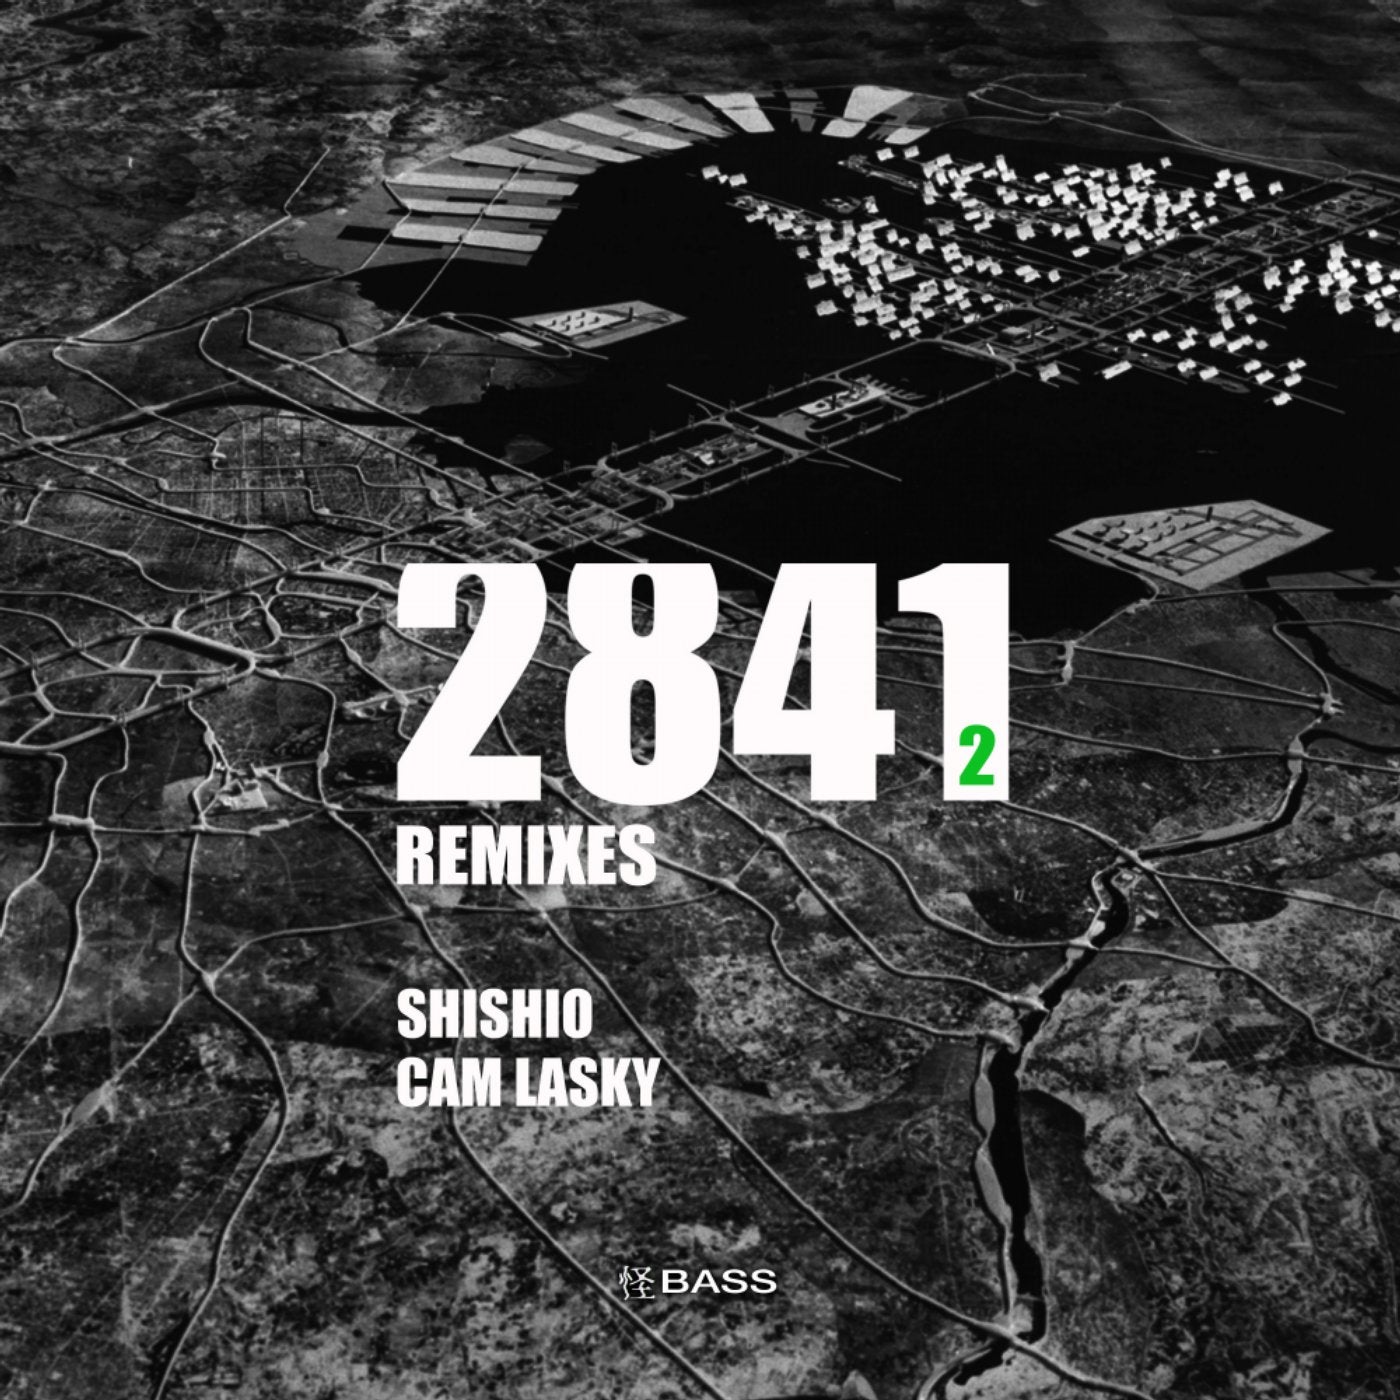 2841, Pt. 2 Remixes